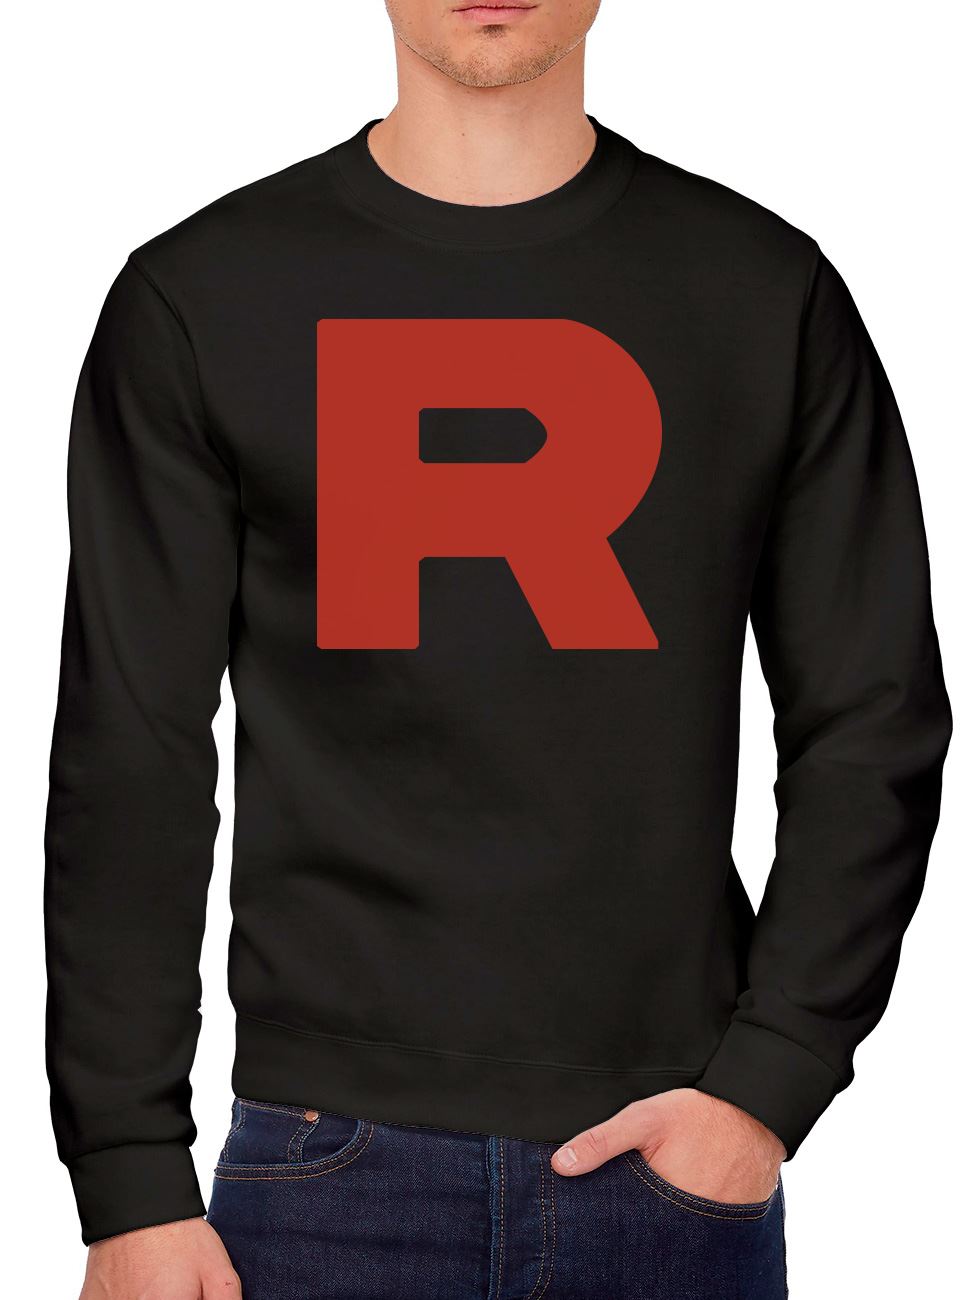 R Team - Youth & Mens Sweatshirt